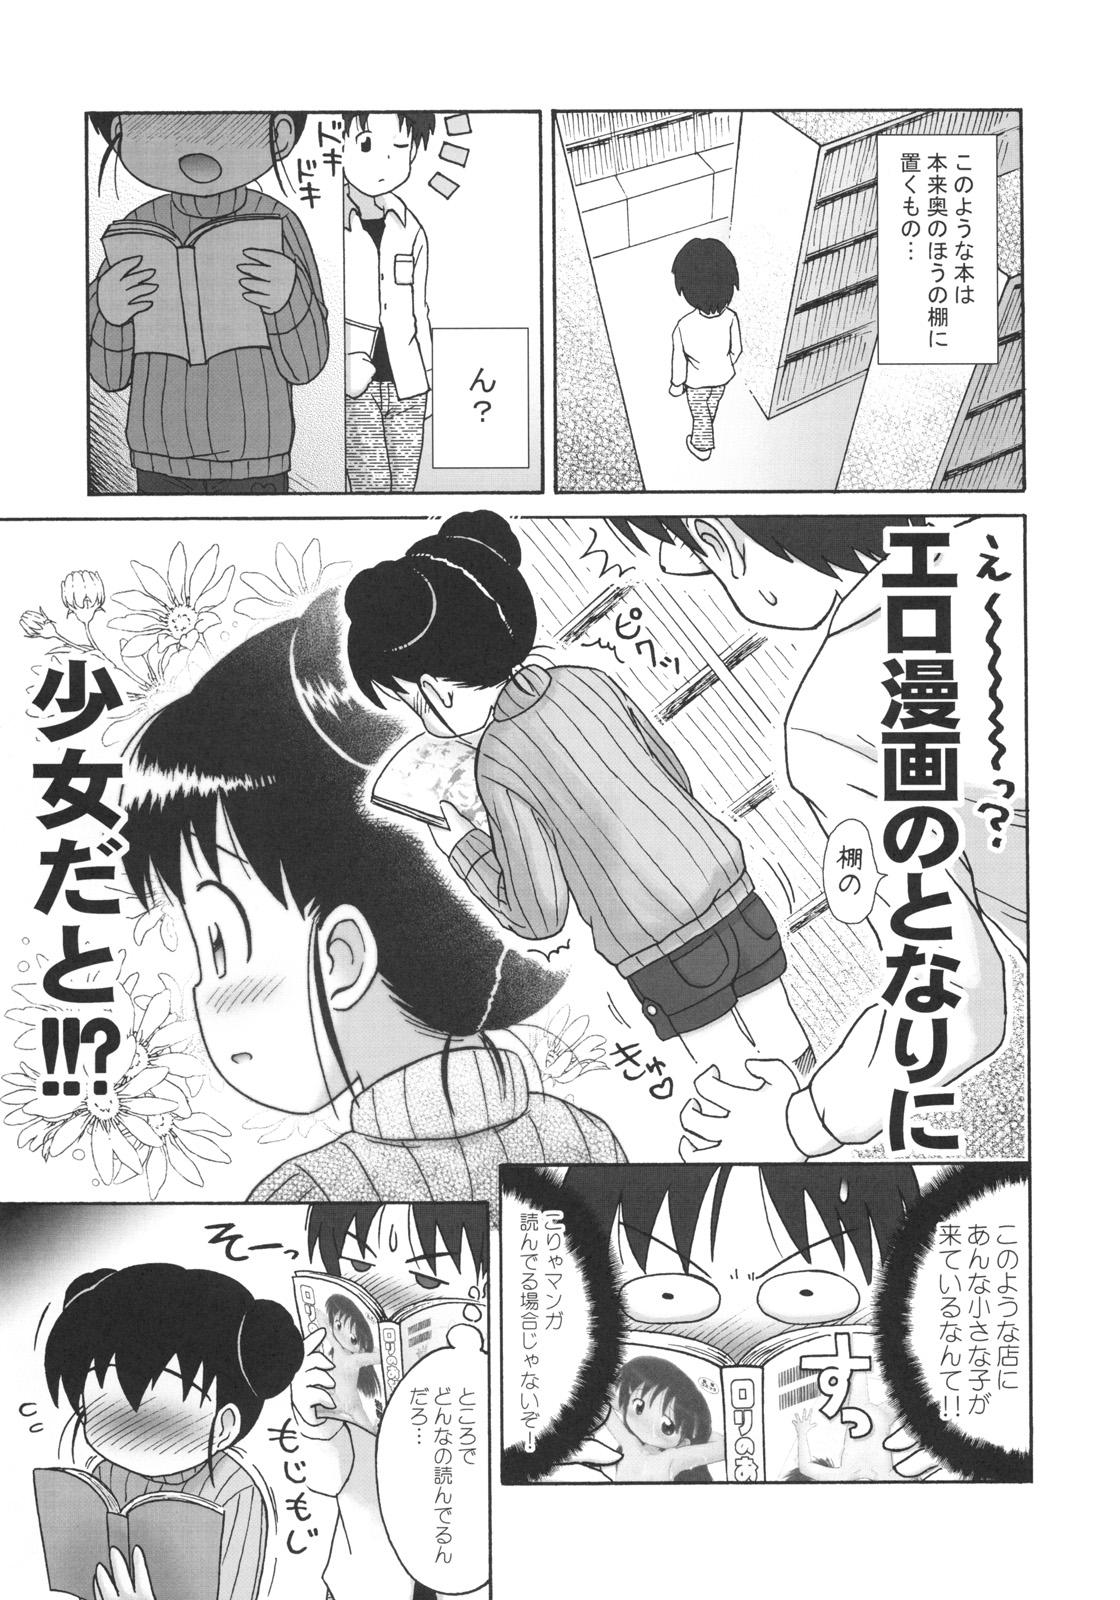 Masterbation Doki Doki Tachiyomi Onii-chan Spy Camera - Page 6